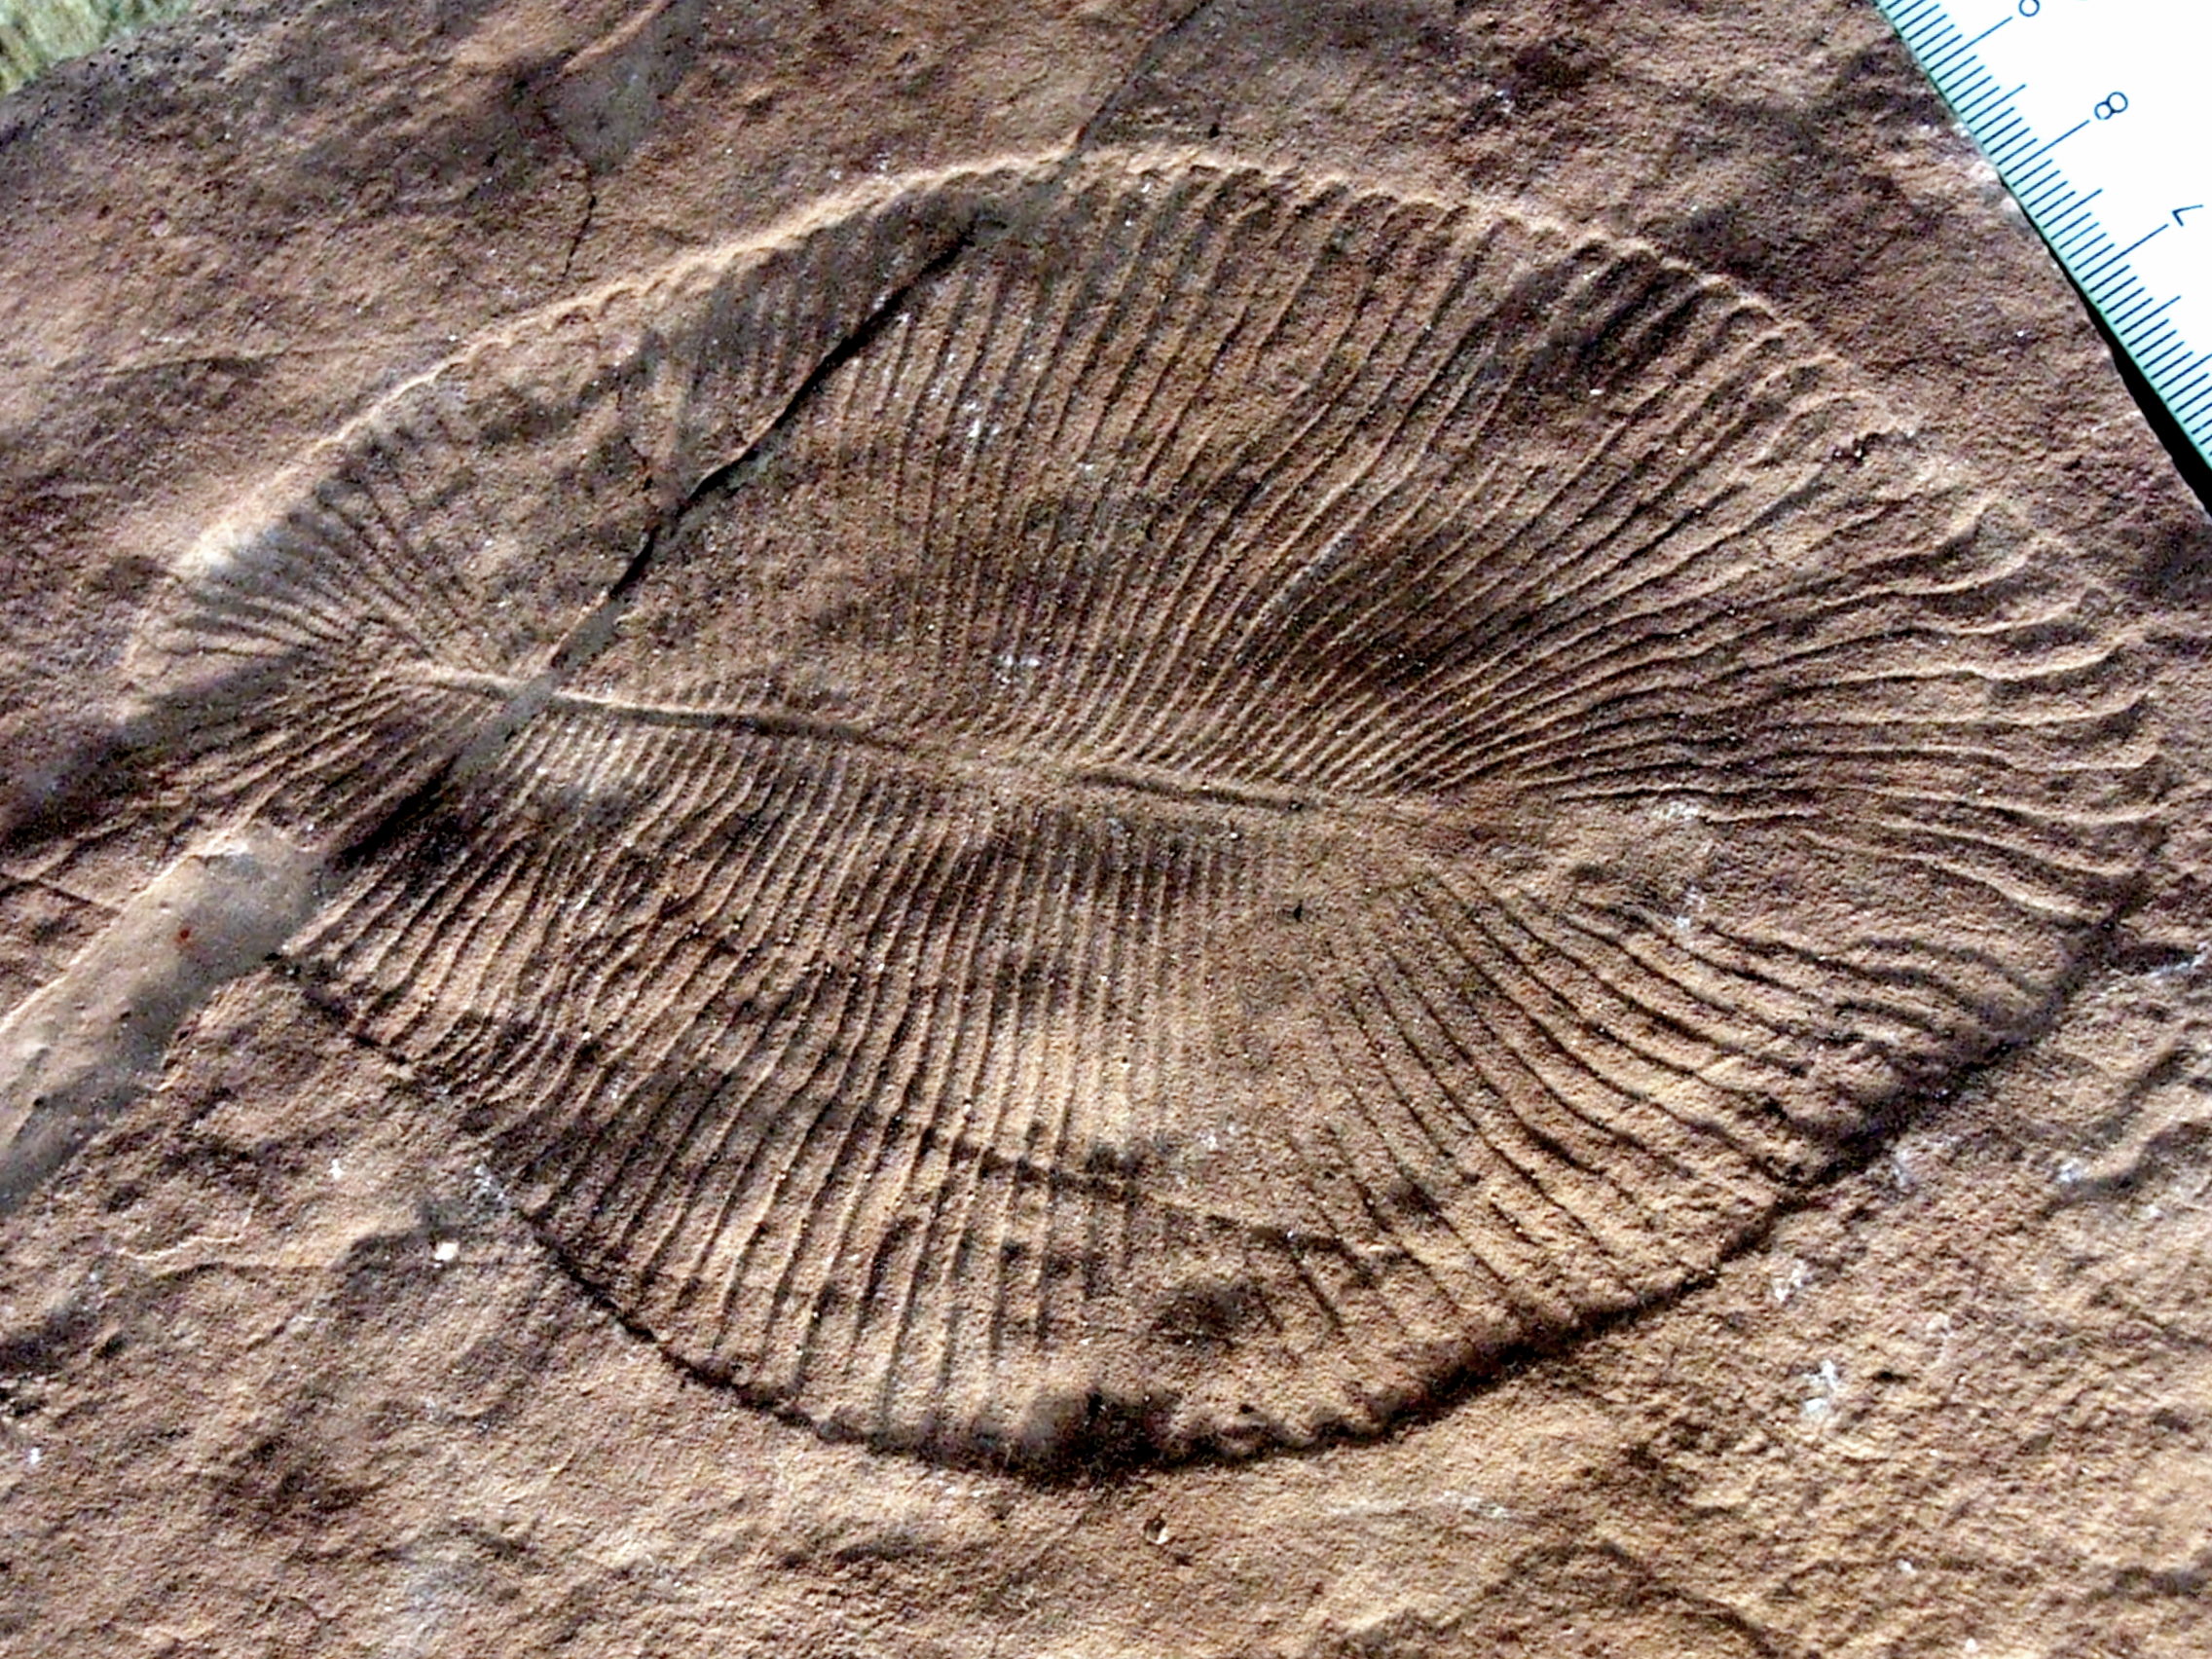 DickinsoniaCostata-fossile